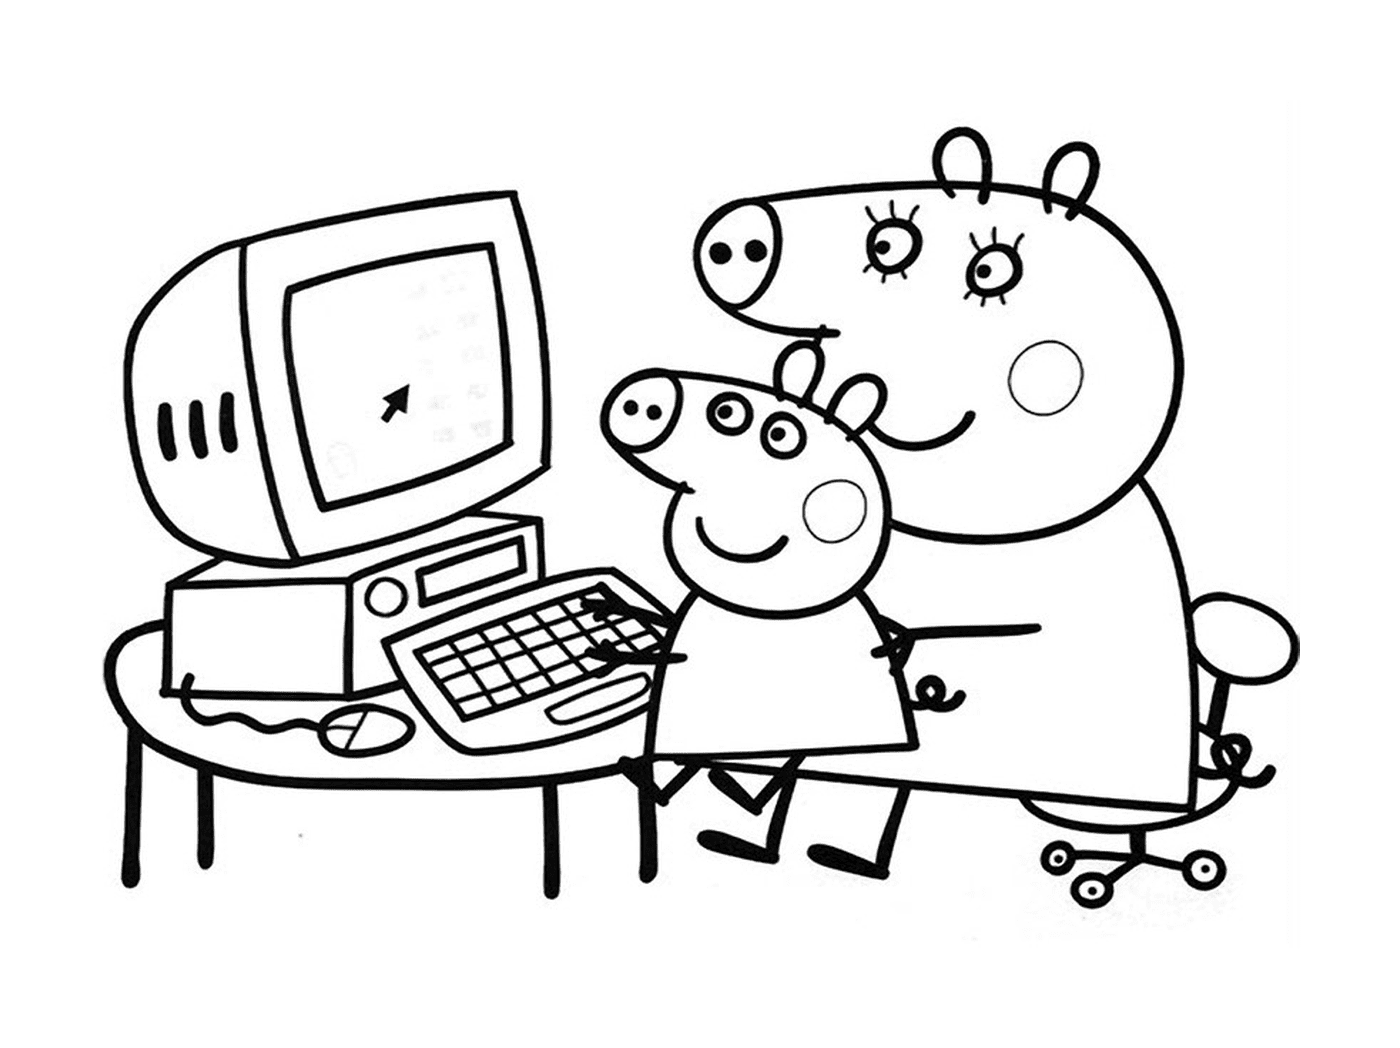  Peppa Pig y George Pig en el ordenador 